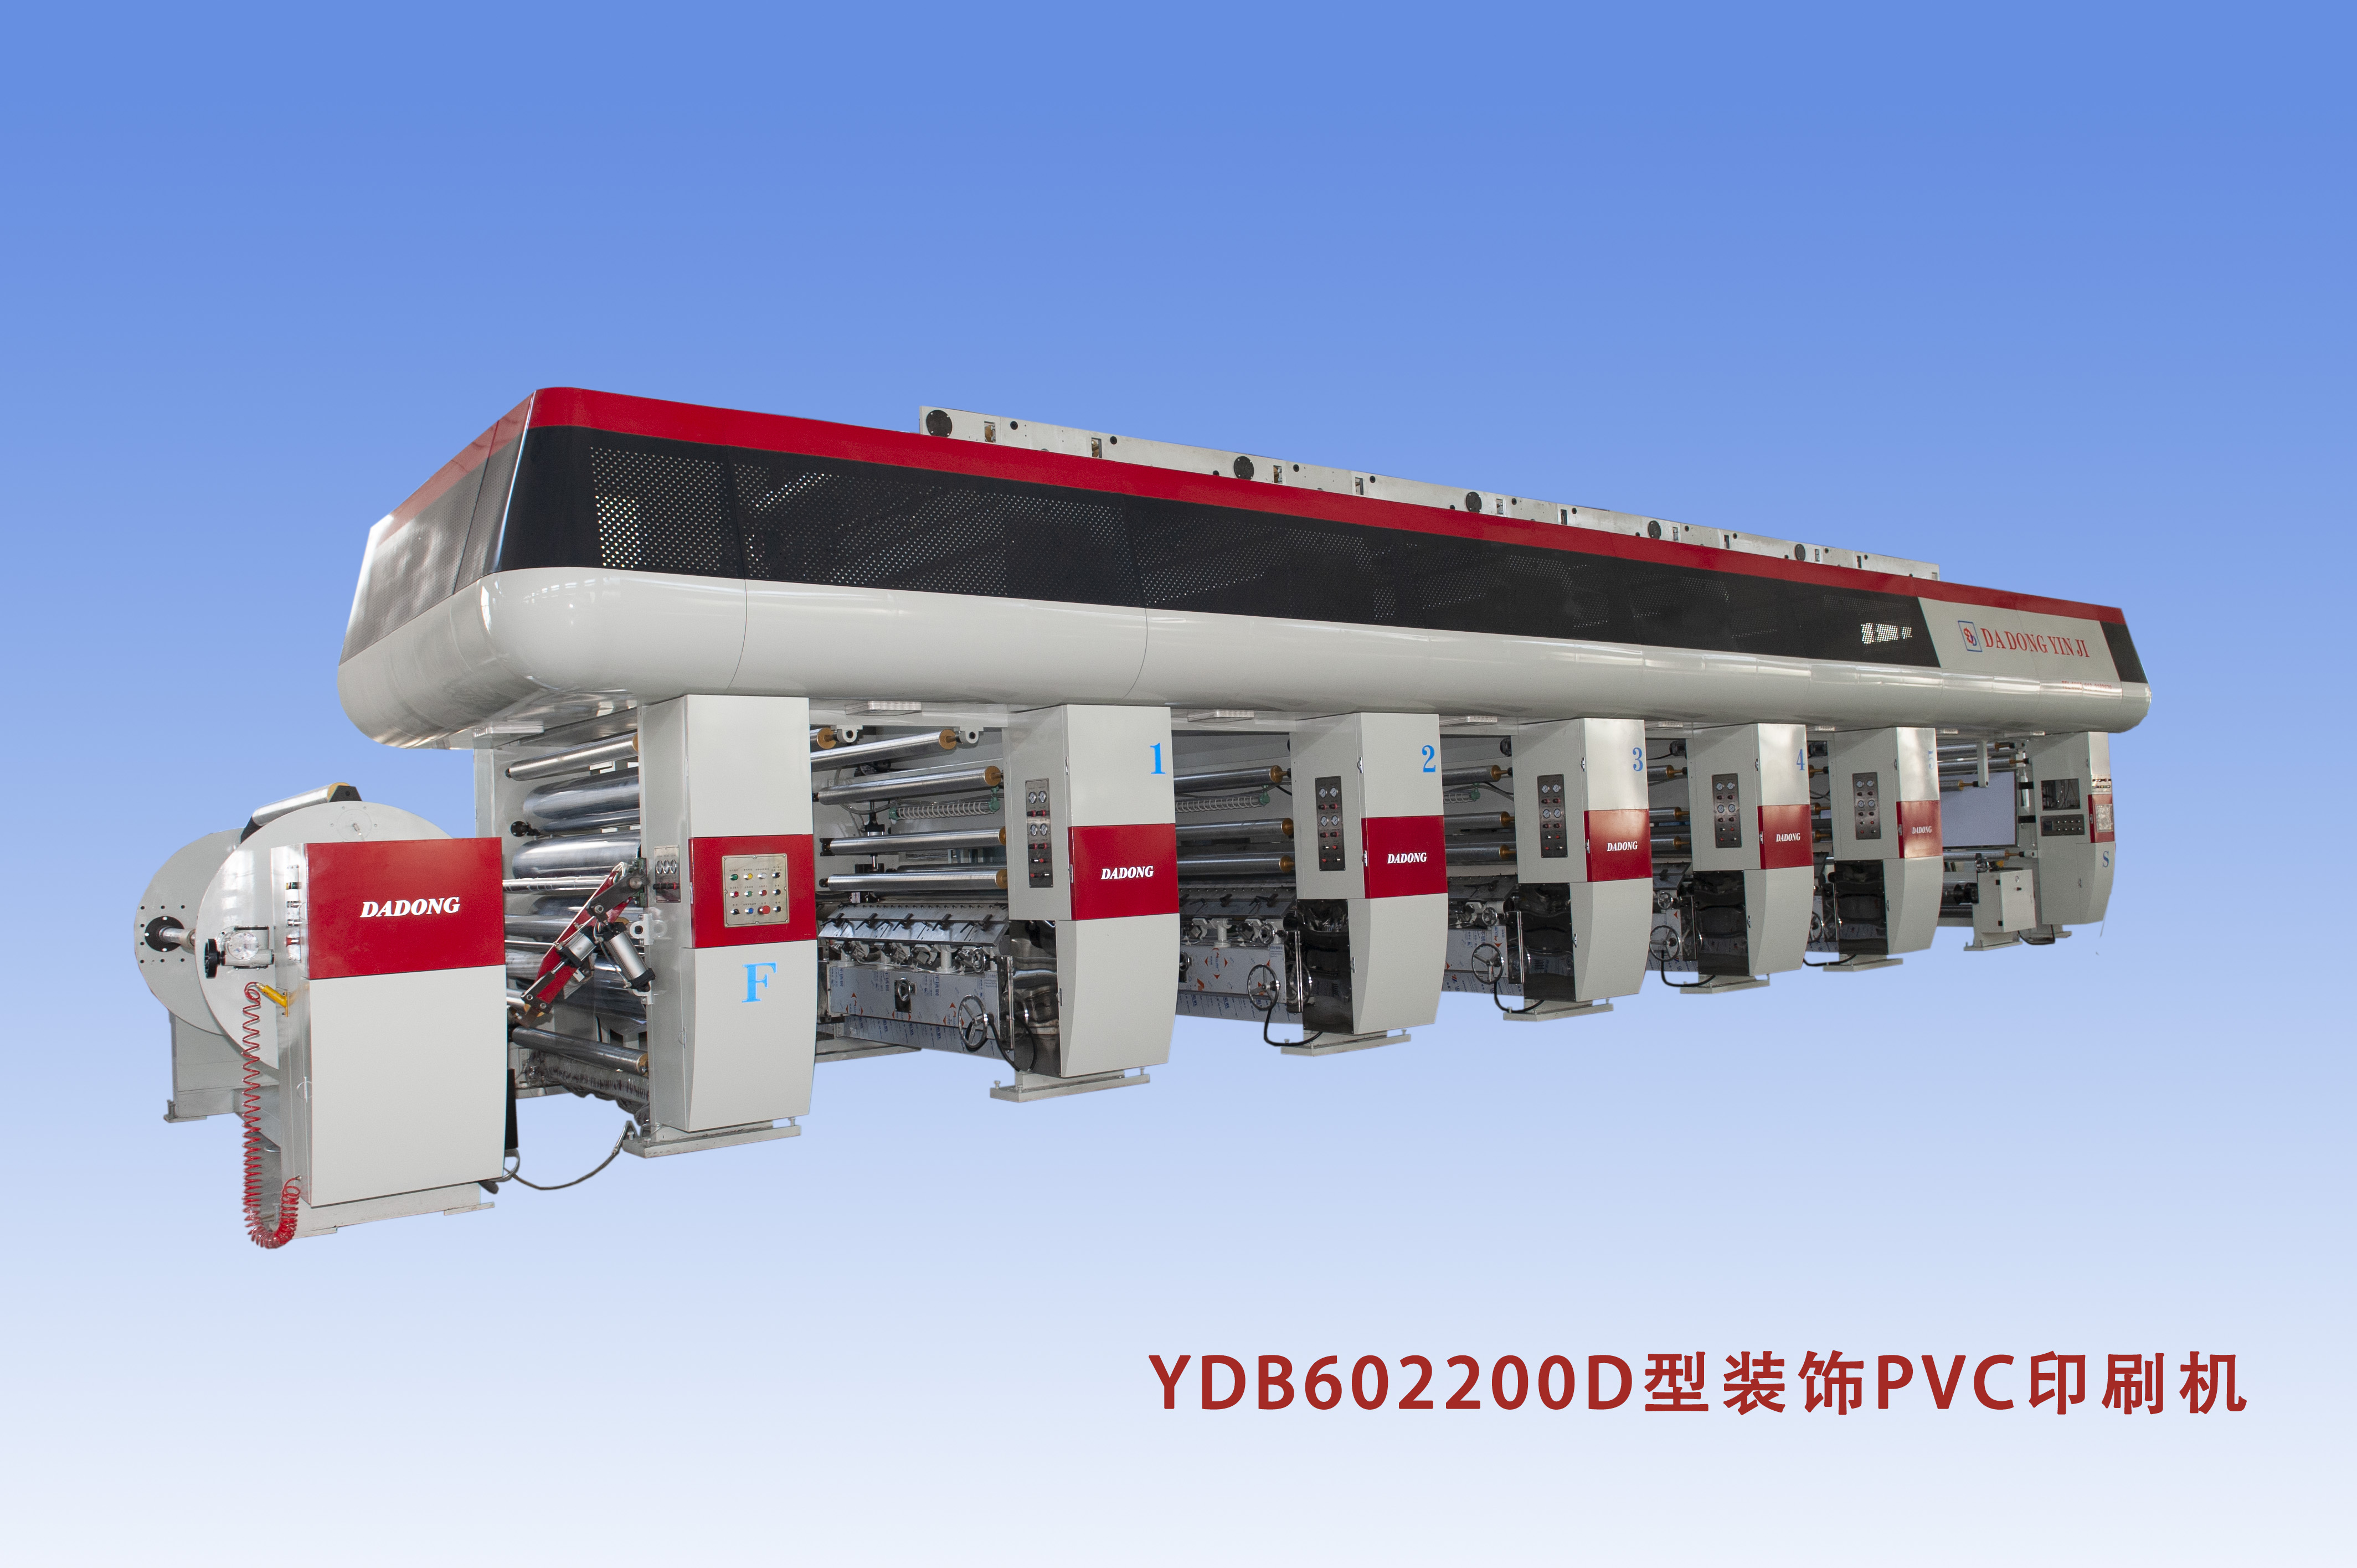 YDB602200D型裝飾PVC印刷機